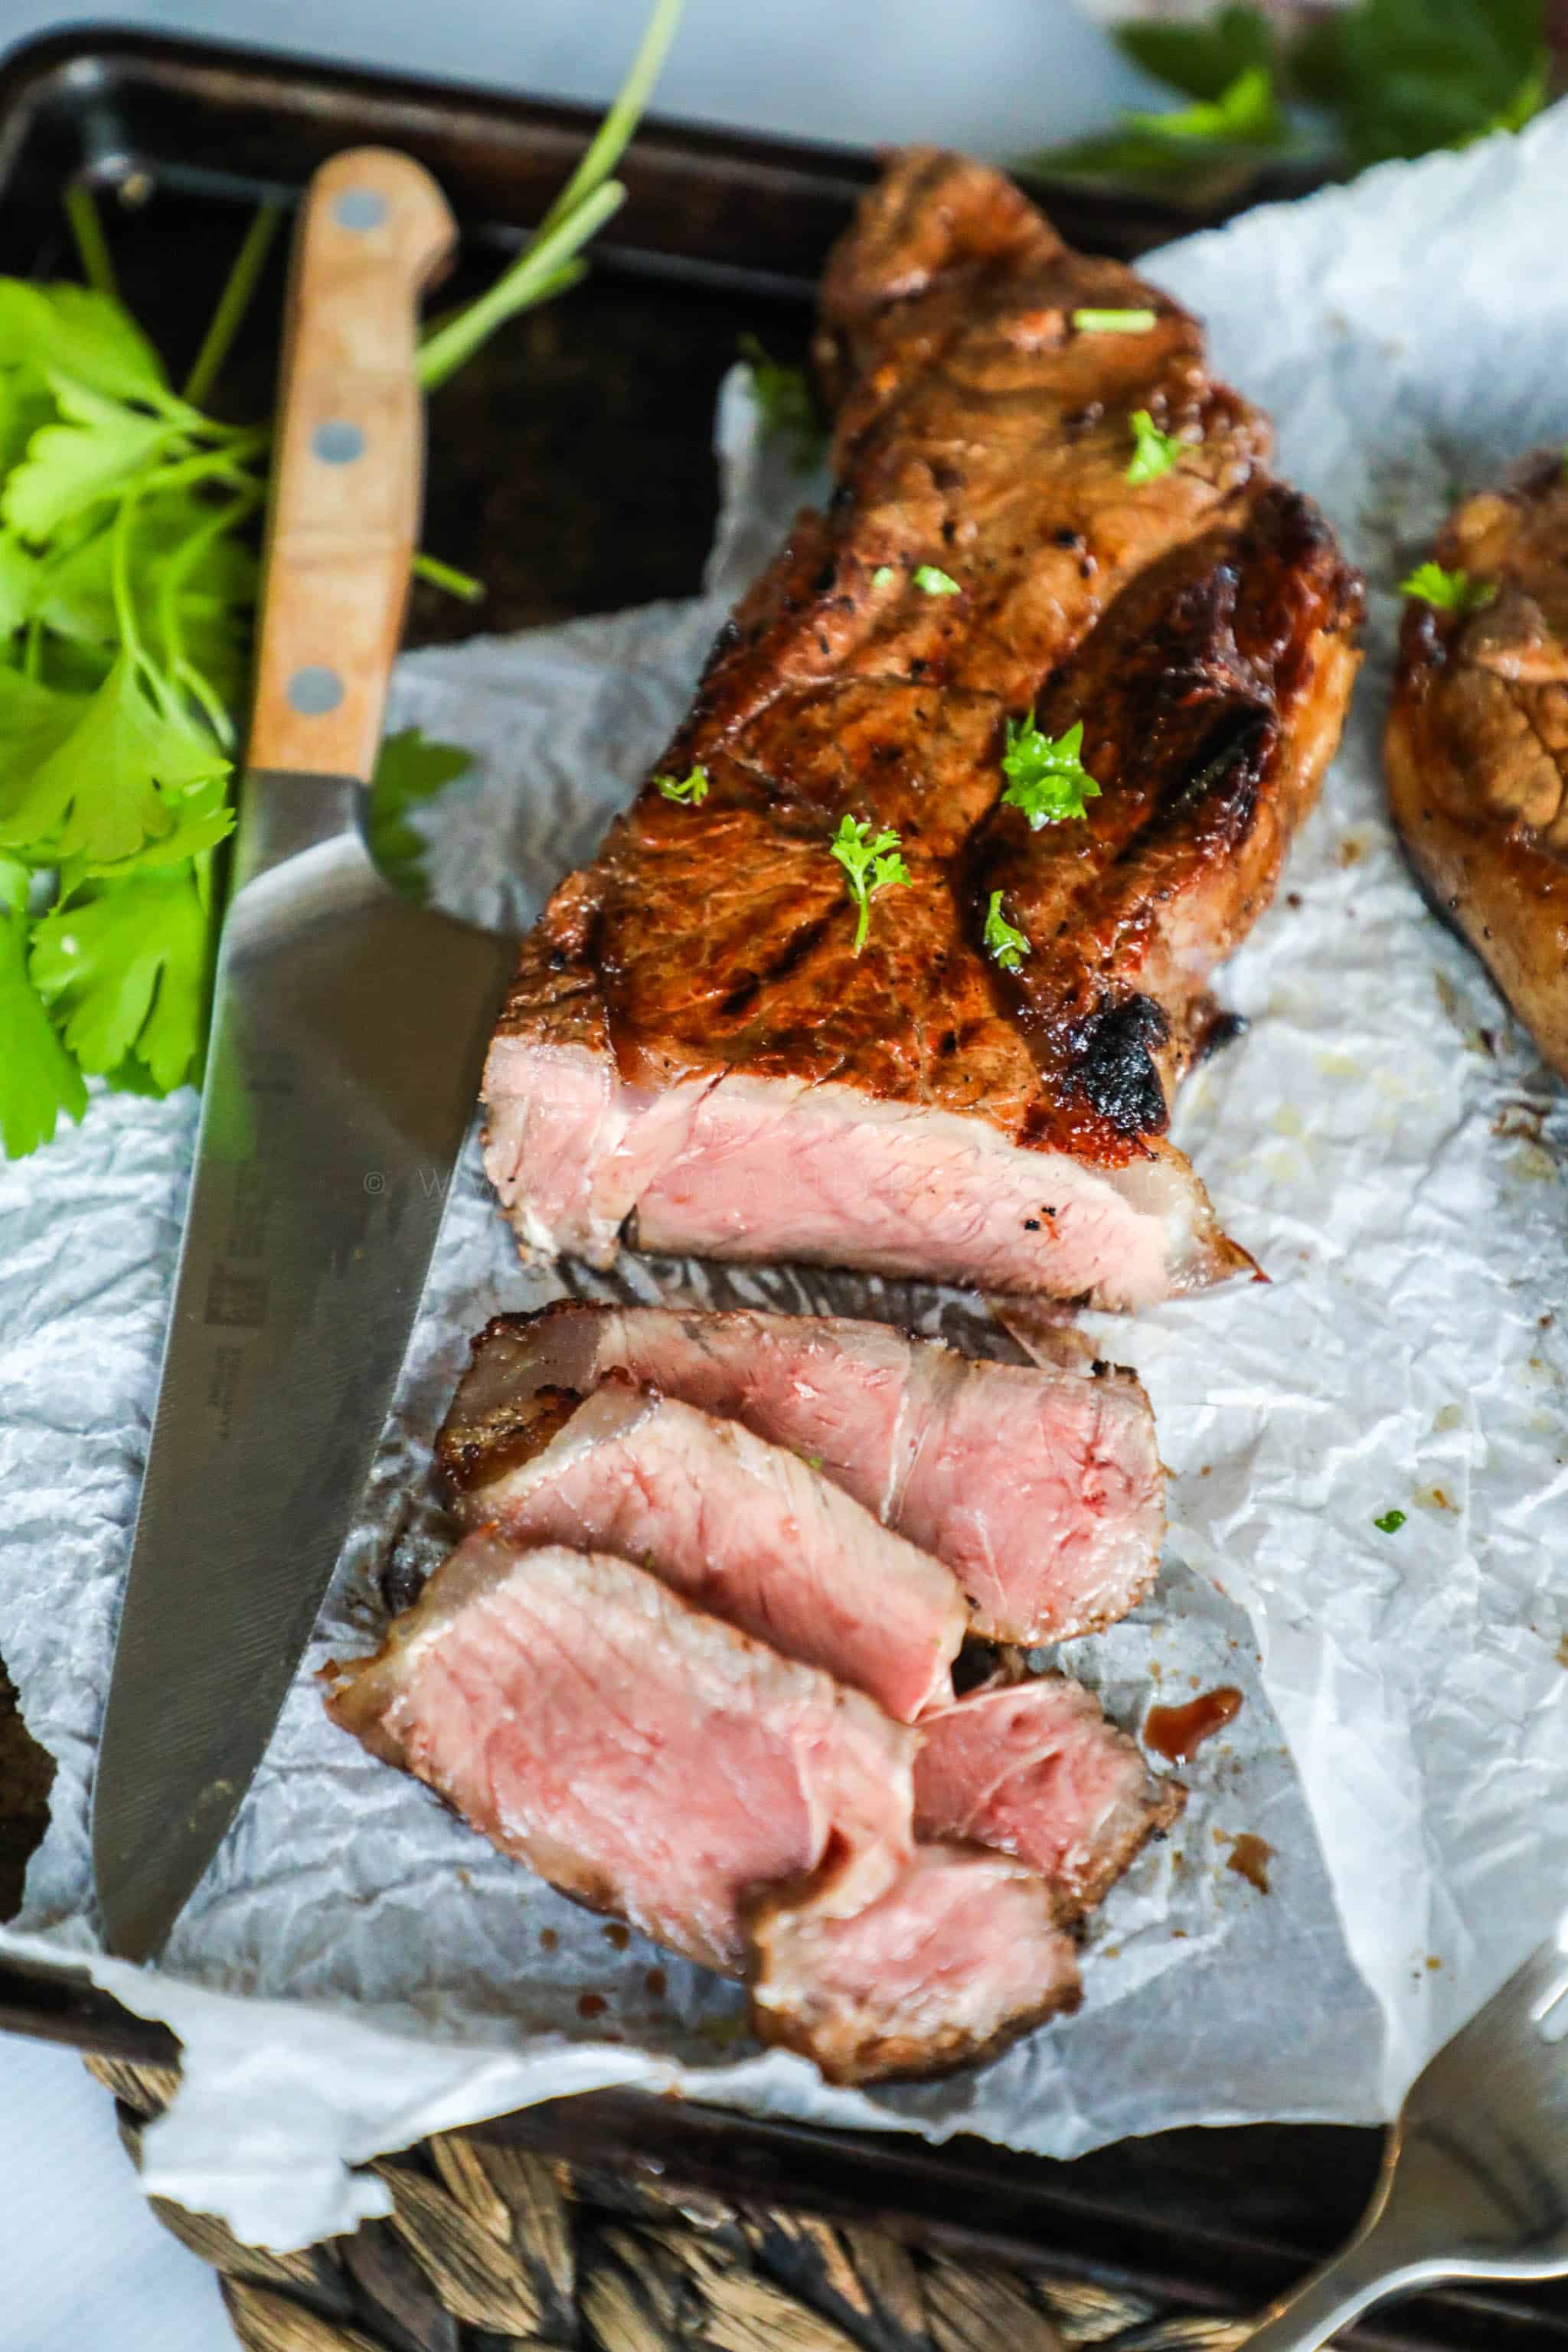 Marinated Steak sliced on a cutting board